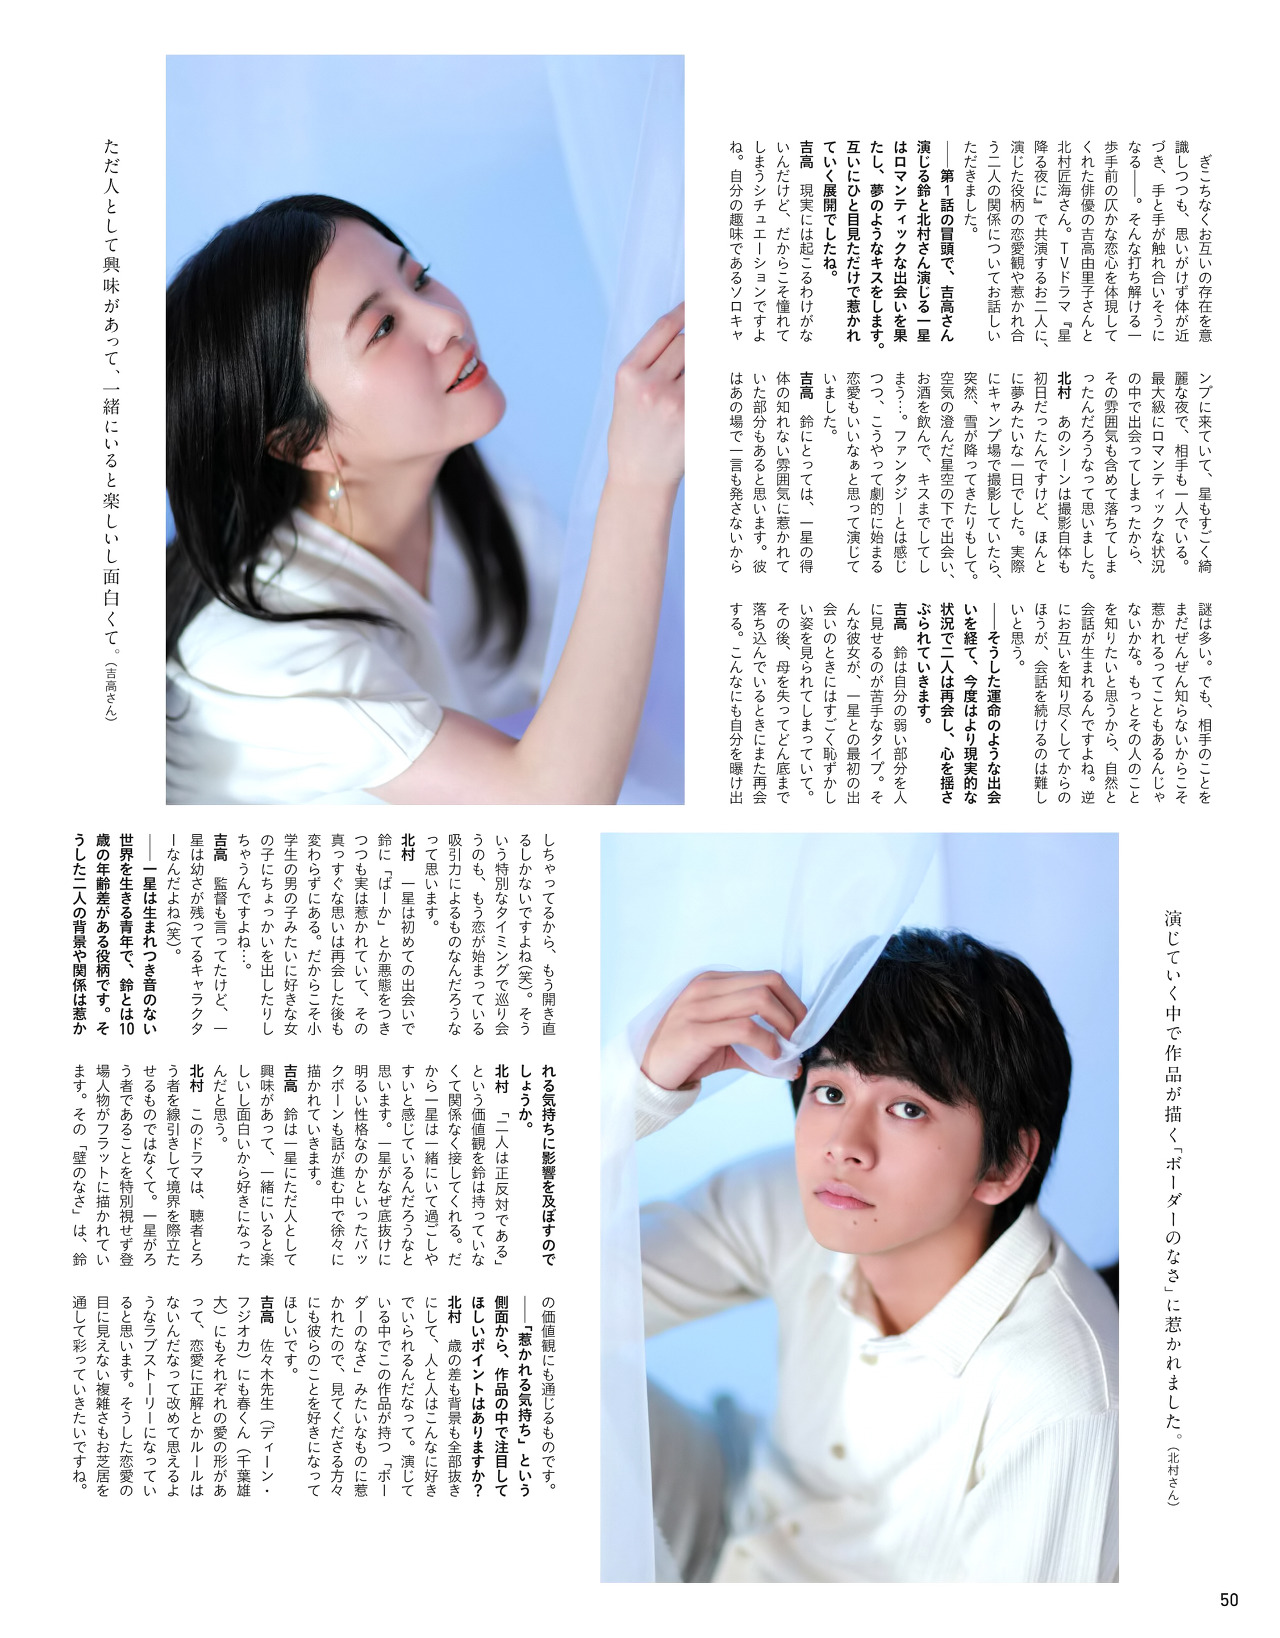 Yoshitaka Yuriko anan February 15, 23rd issue